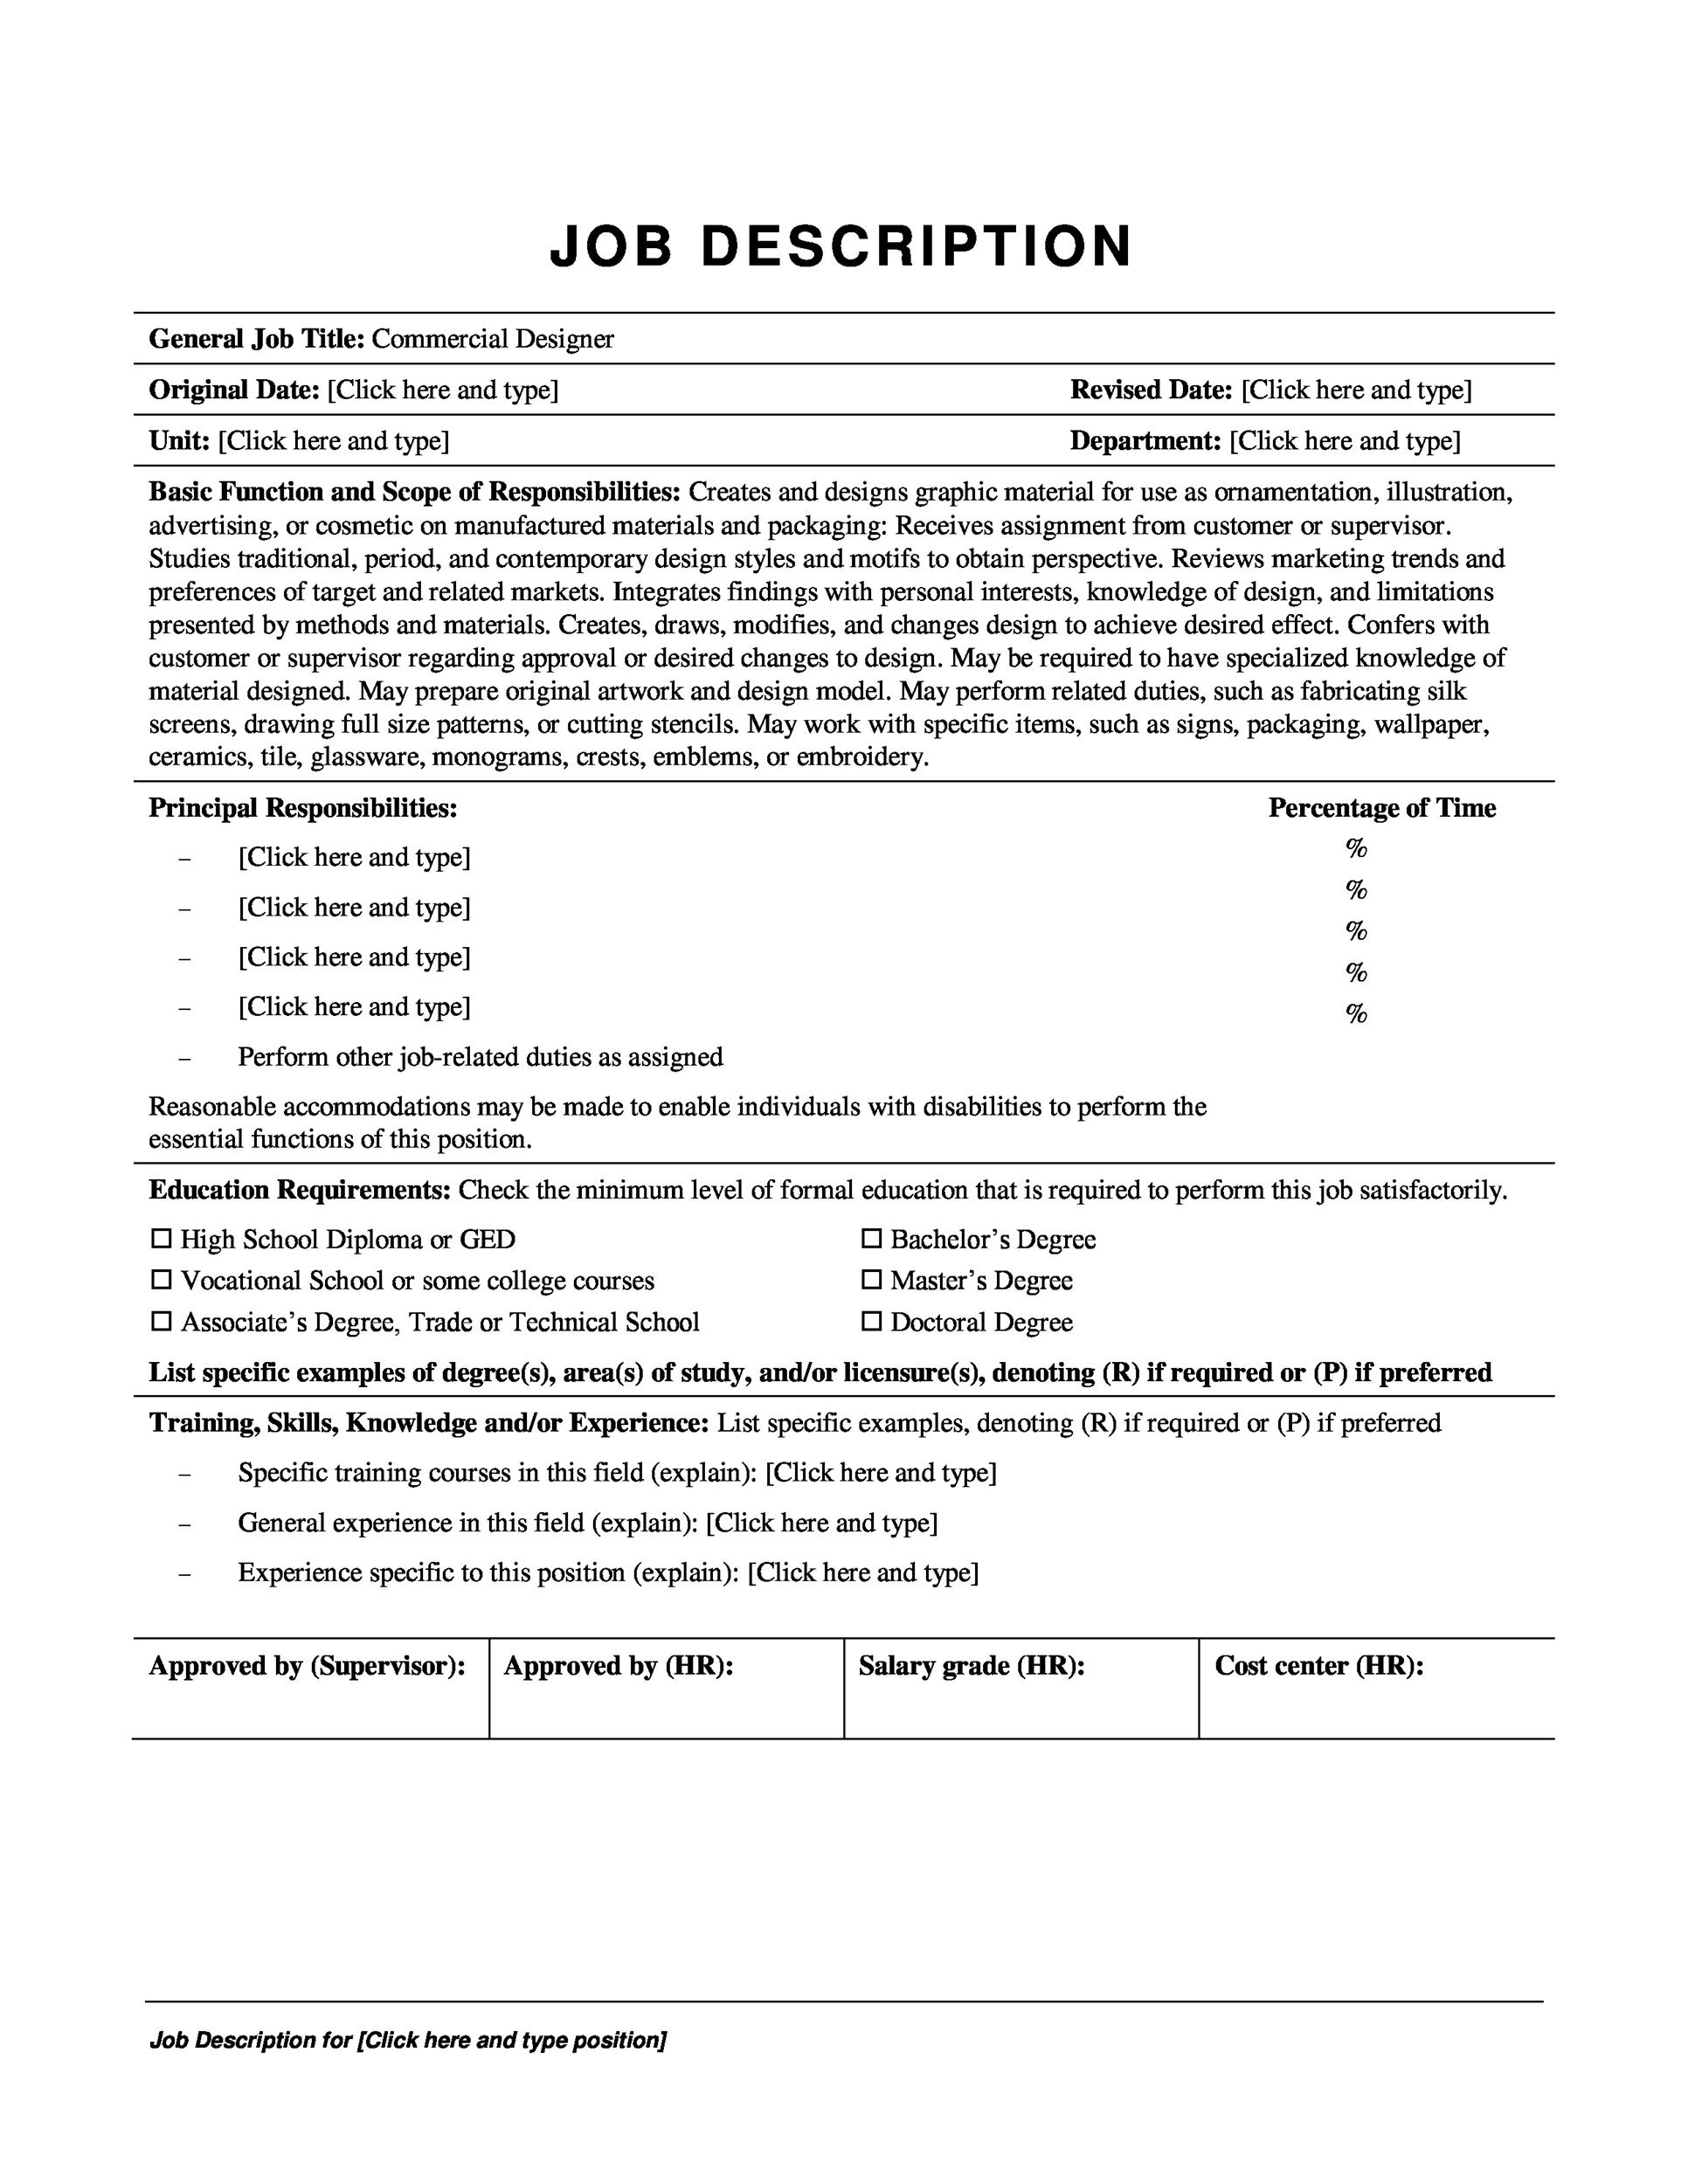 job description resume letter